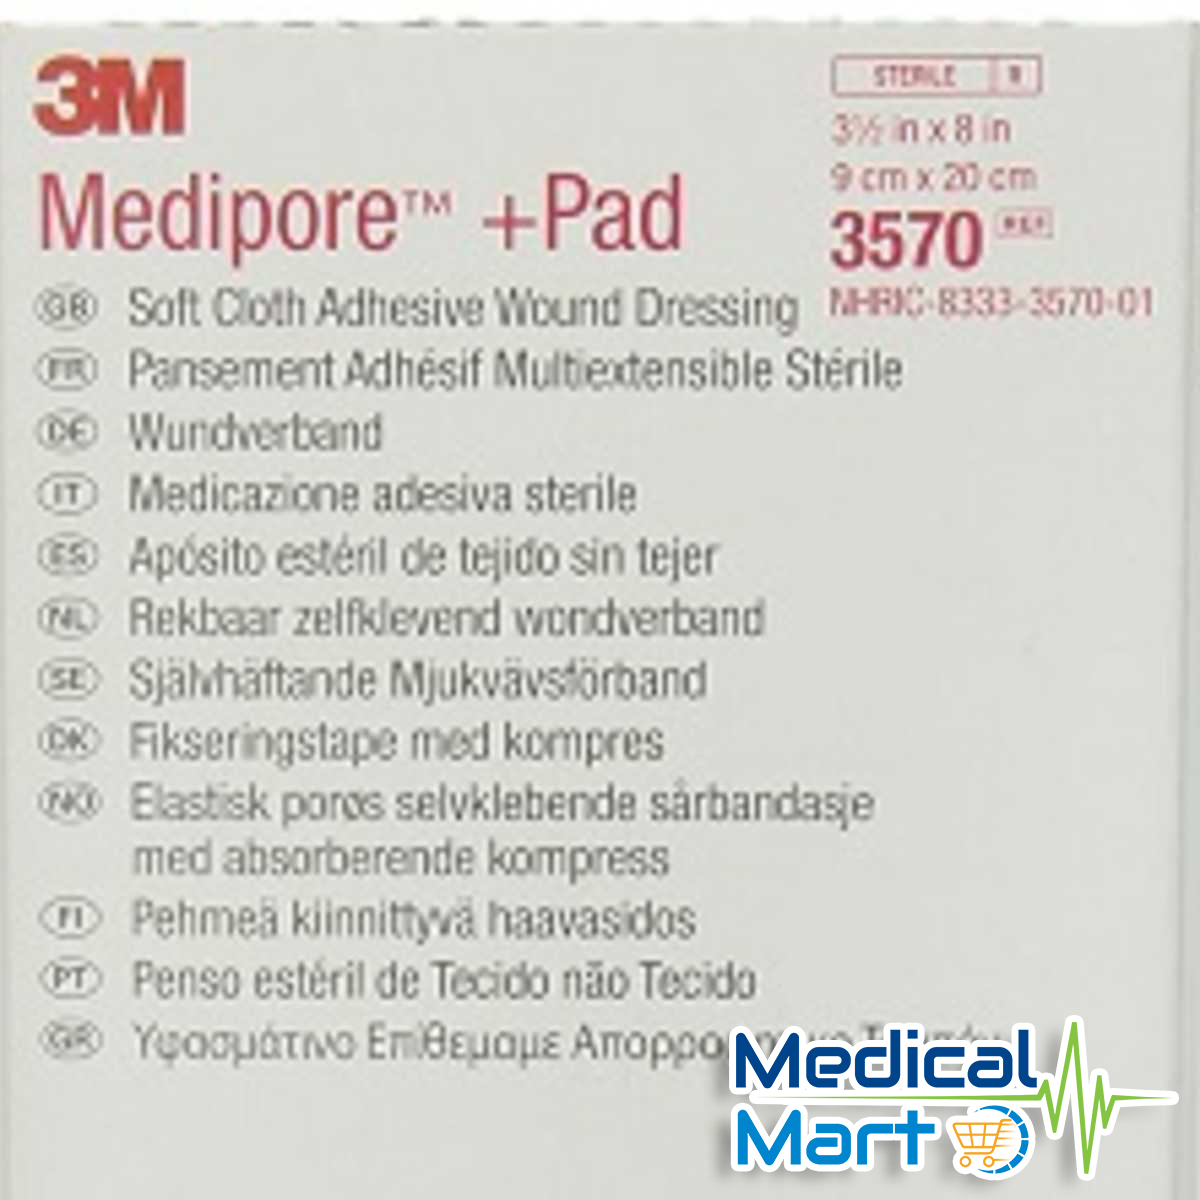 3m Medipore + Pad Soft Cloth Adhesive Wound Dressing, 3570 (10cm x 20cm)